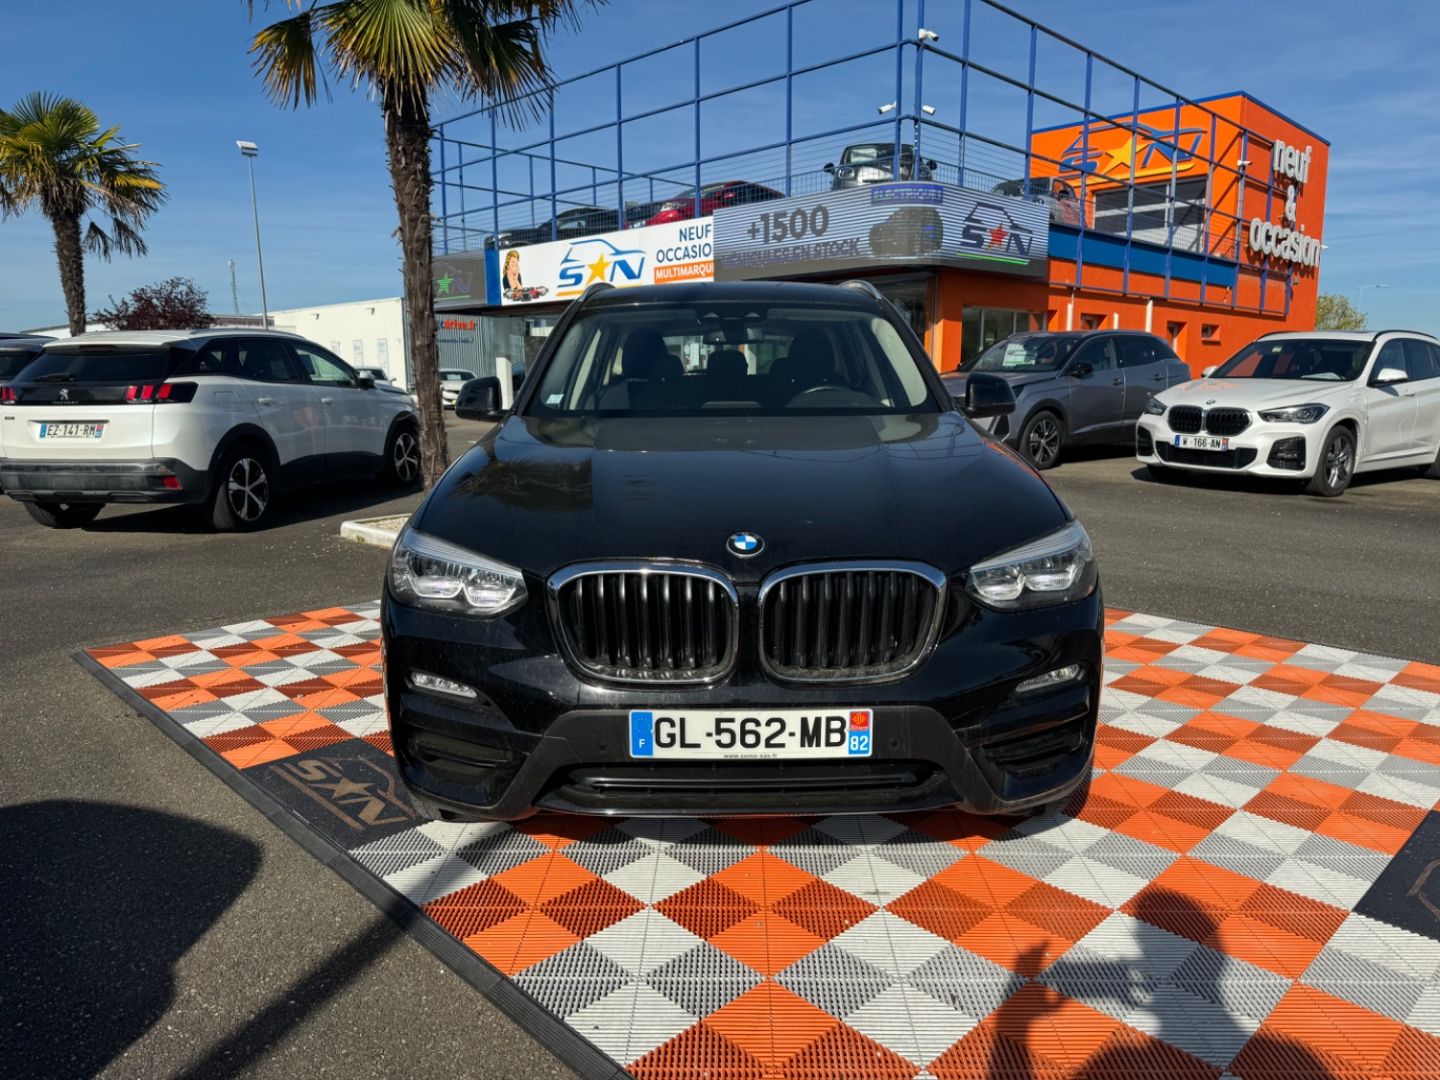 BMW X3 - 2.0 D 190 BVA8 BUSINESS GPS JA 18" (2019)